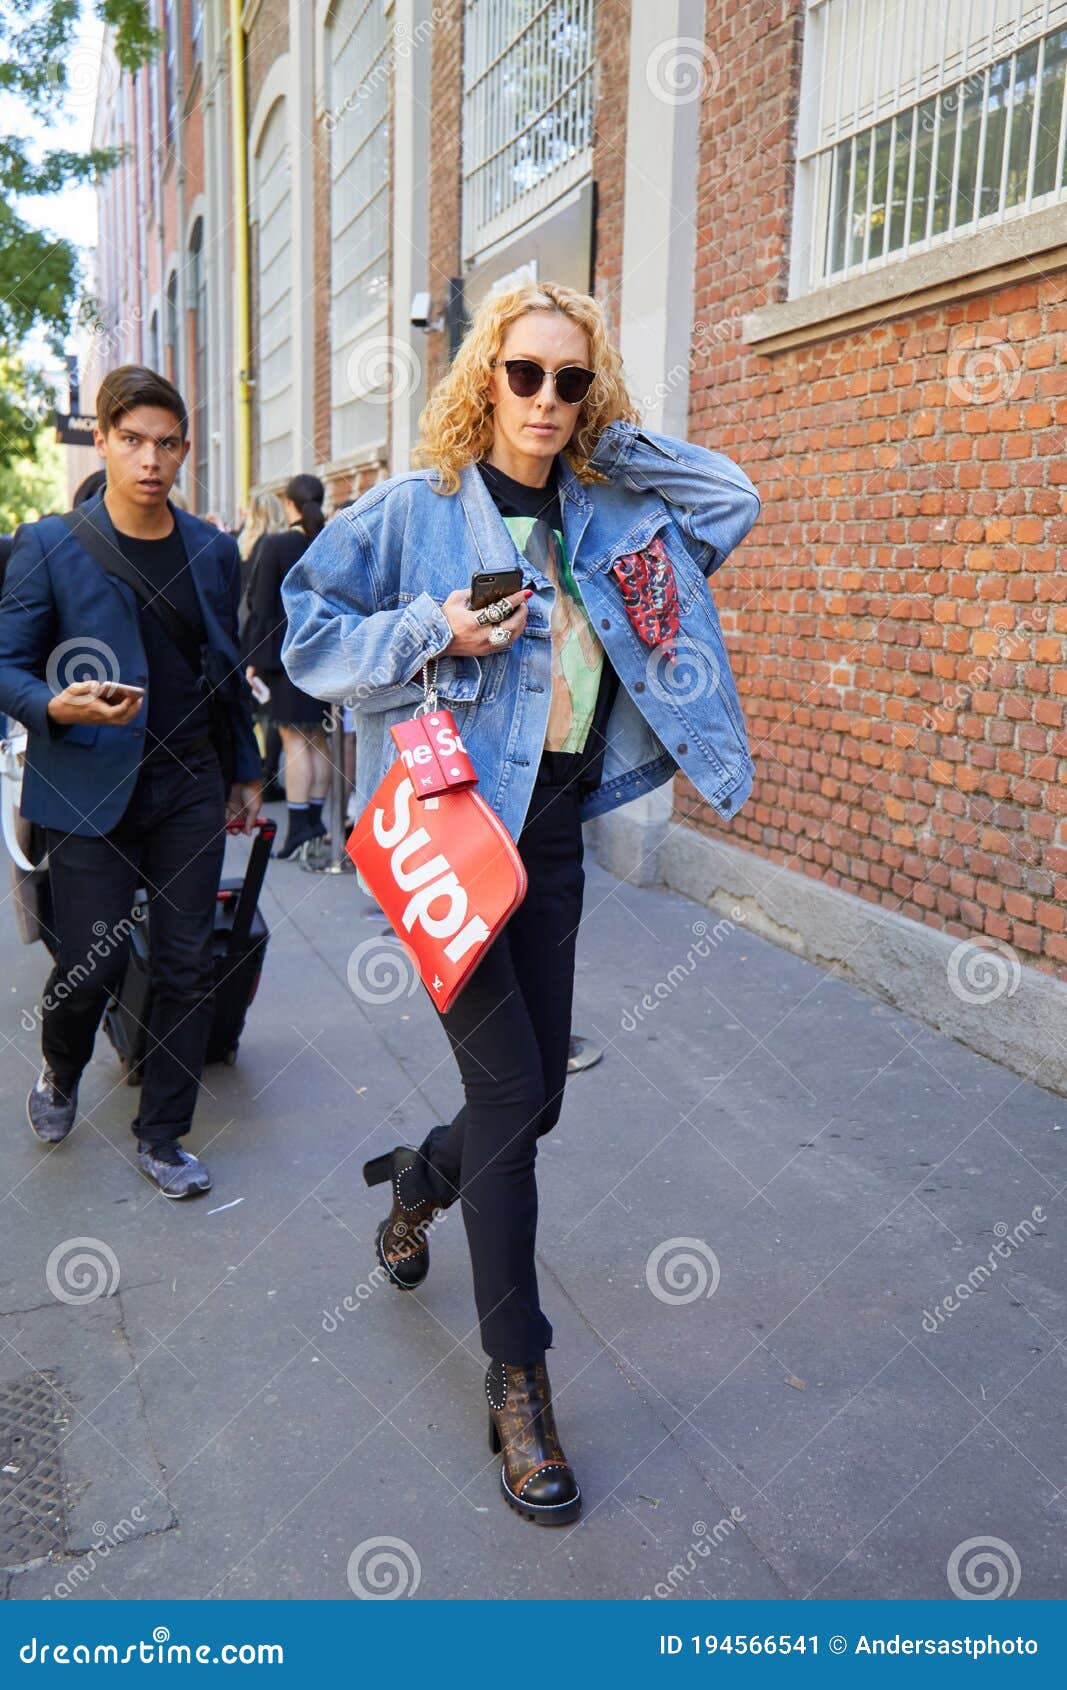 Elina Halimi with Jeans Jacket and Red Supreme Bag before Fendi Fashion Show,  Milan Fashion Week Street Editorial Photo - Image of italy, elina: 194566541